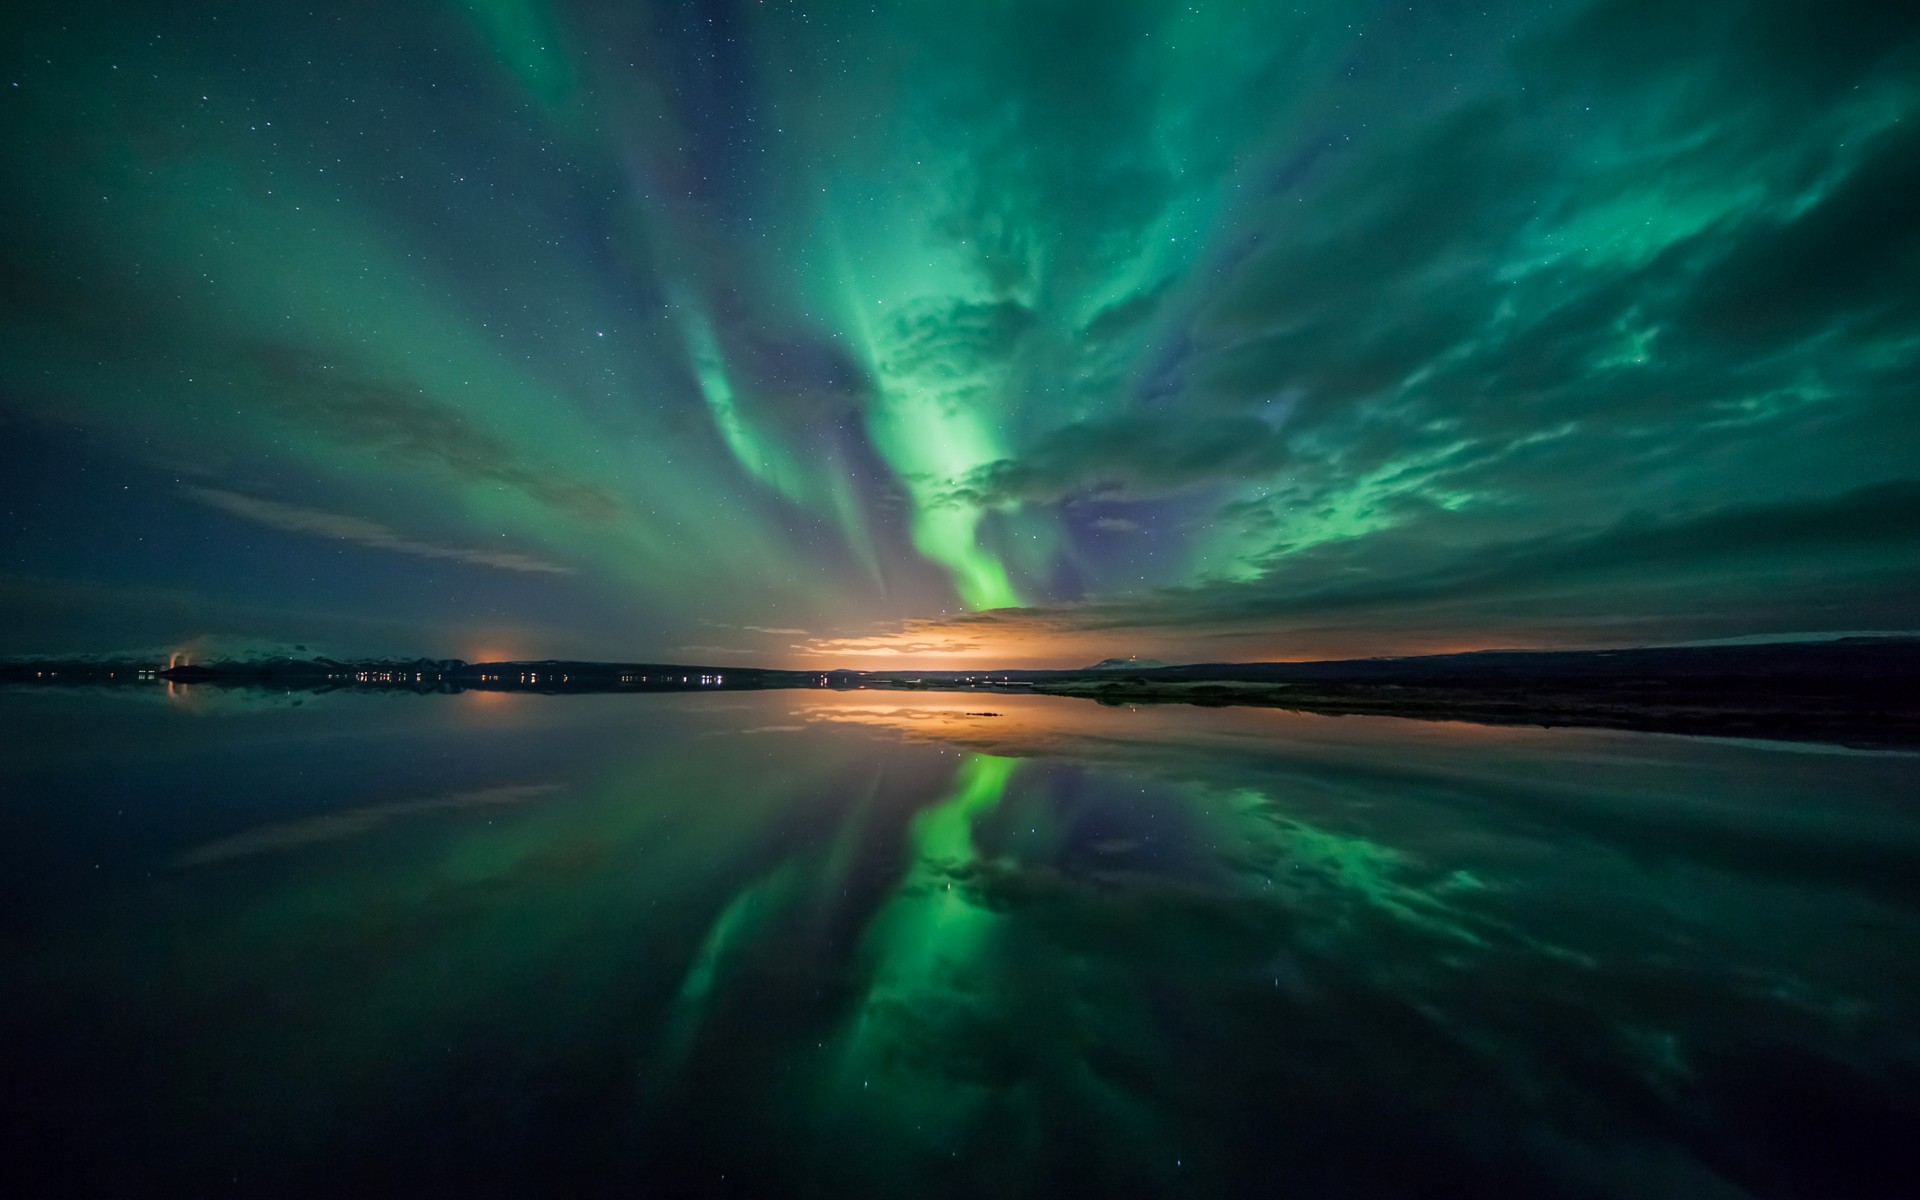 General 1920x1200 nature landscape aurorae reflection starred sky night green sky lake stars nordic landscapes